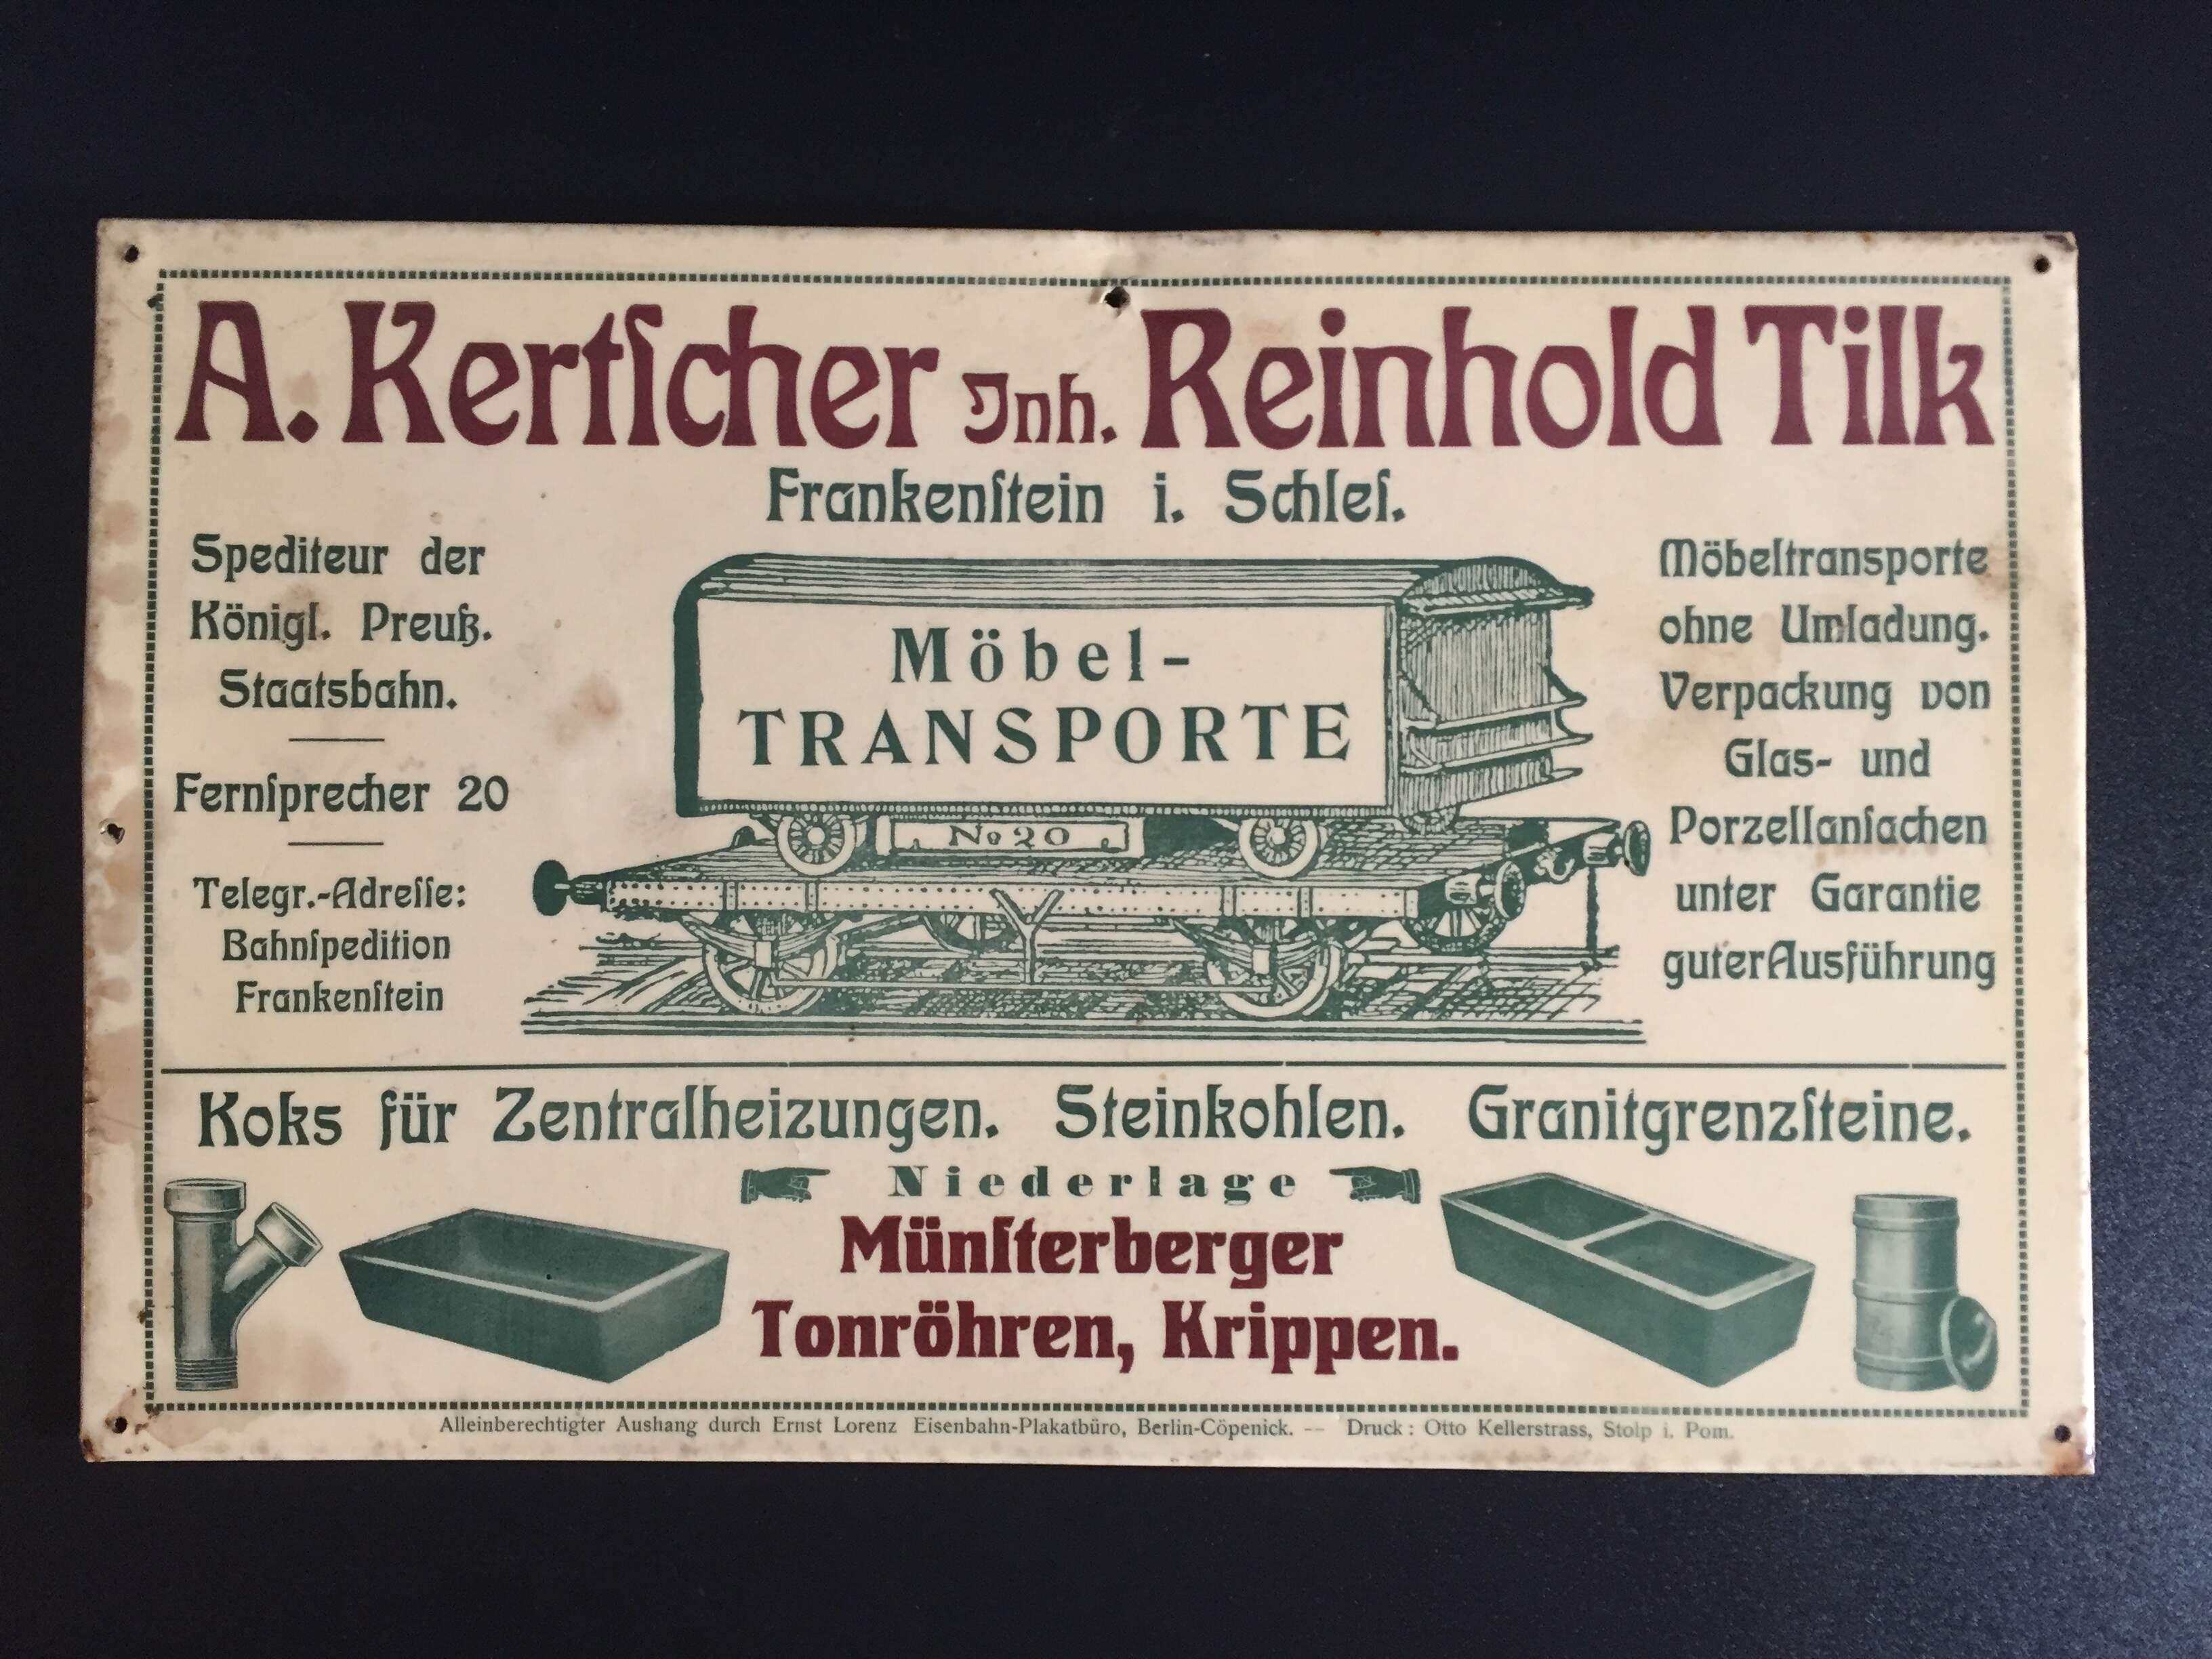 Blechschild Reinhold Tilk Möbeltranporte um 1900